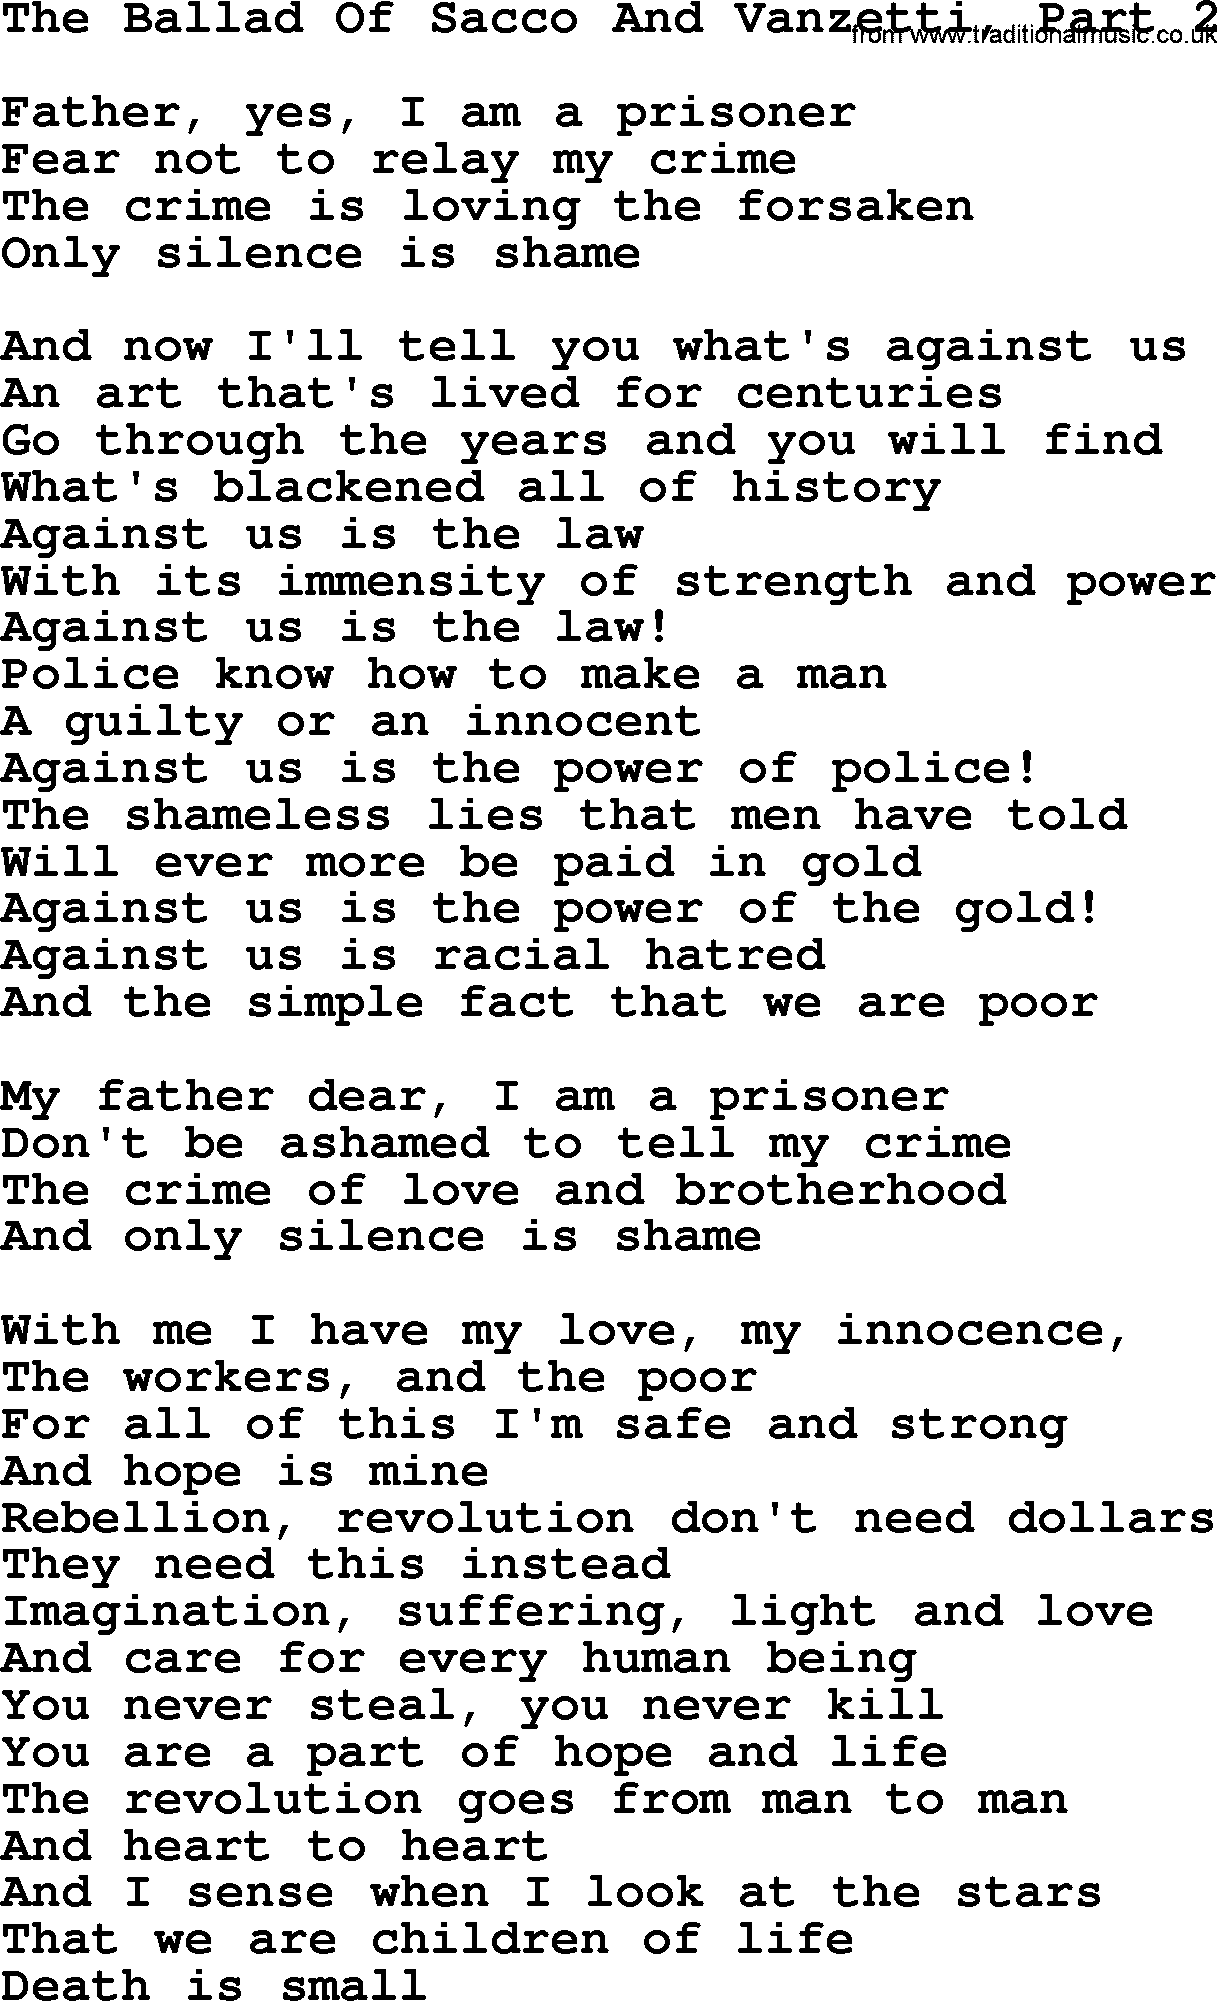 Joan Baez song The Ballad Of Sacco And Vanzetti, Part 2, lyrics